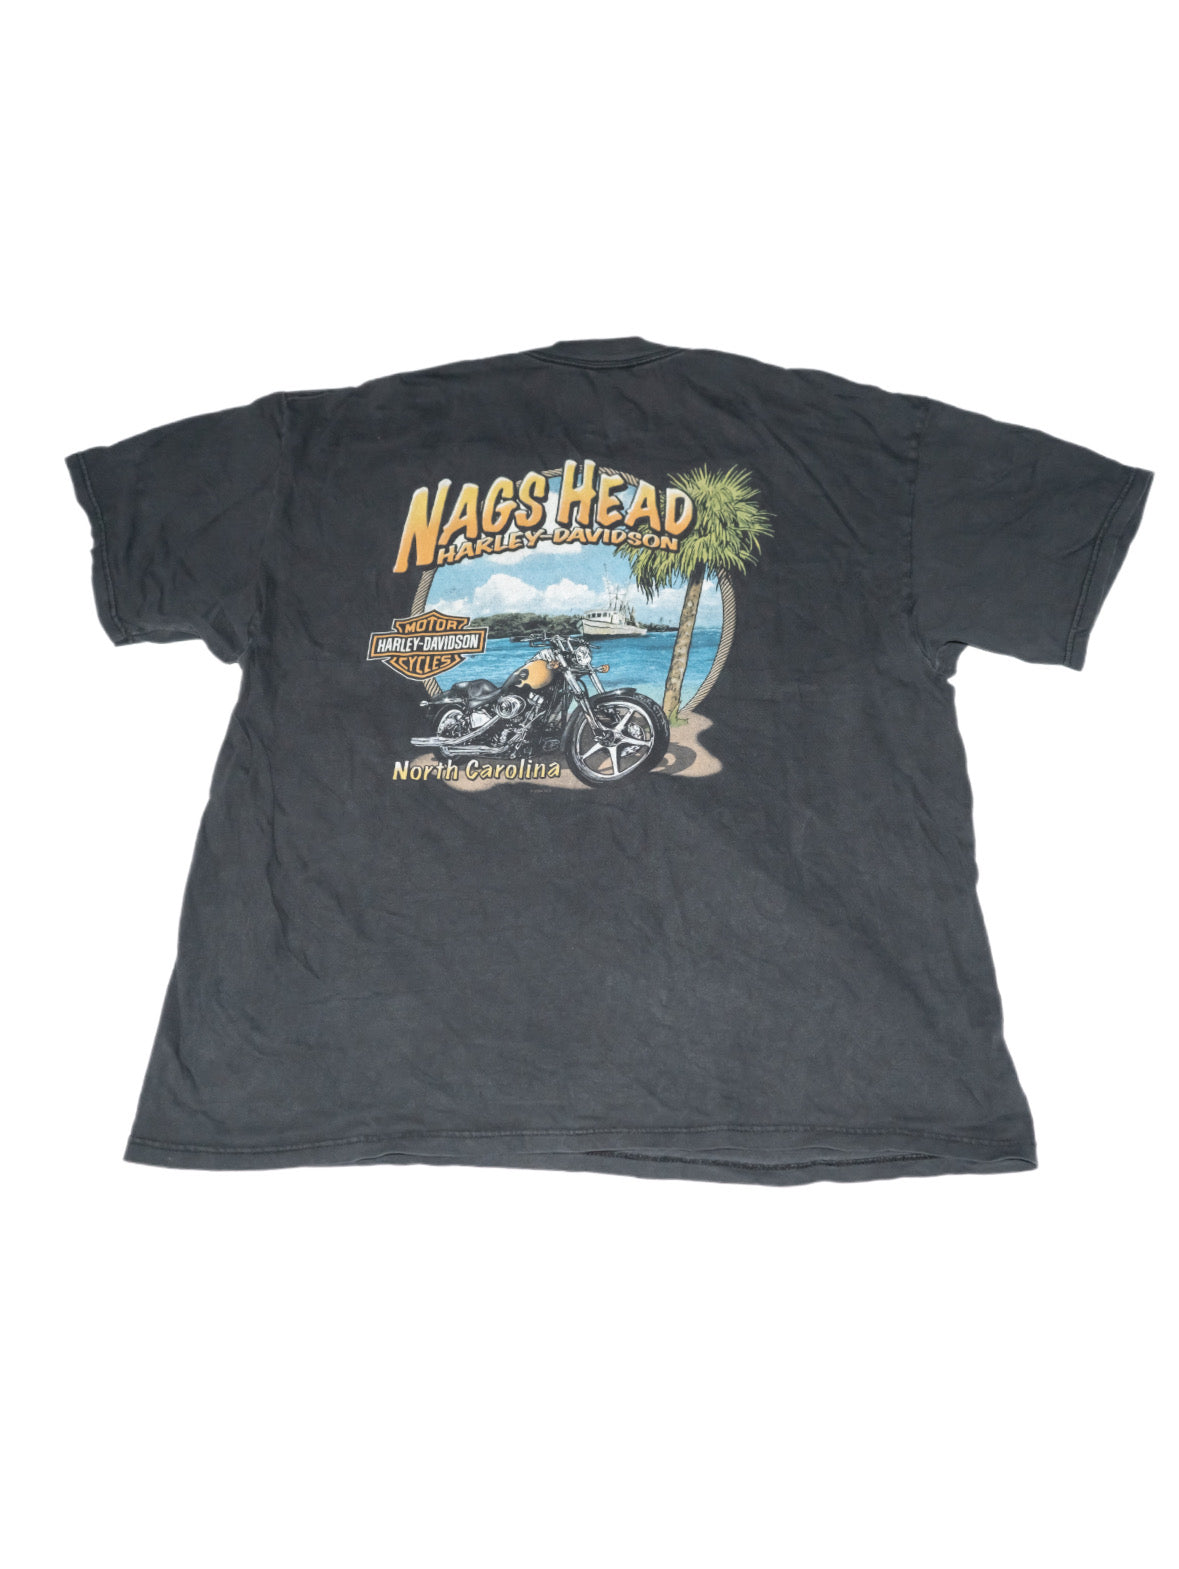 Harley Davidson Nags Head T-Shirt